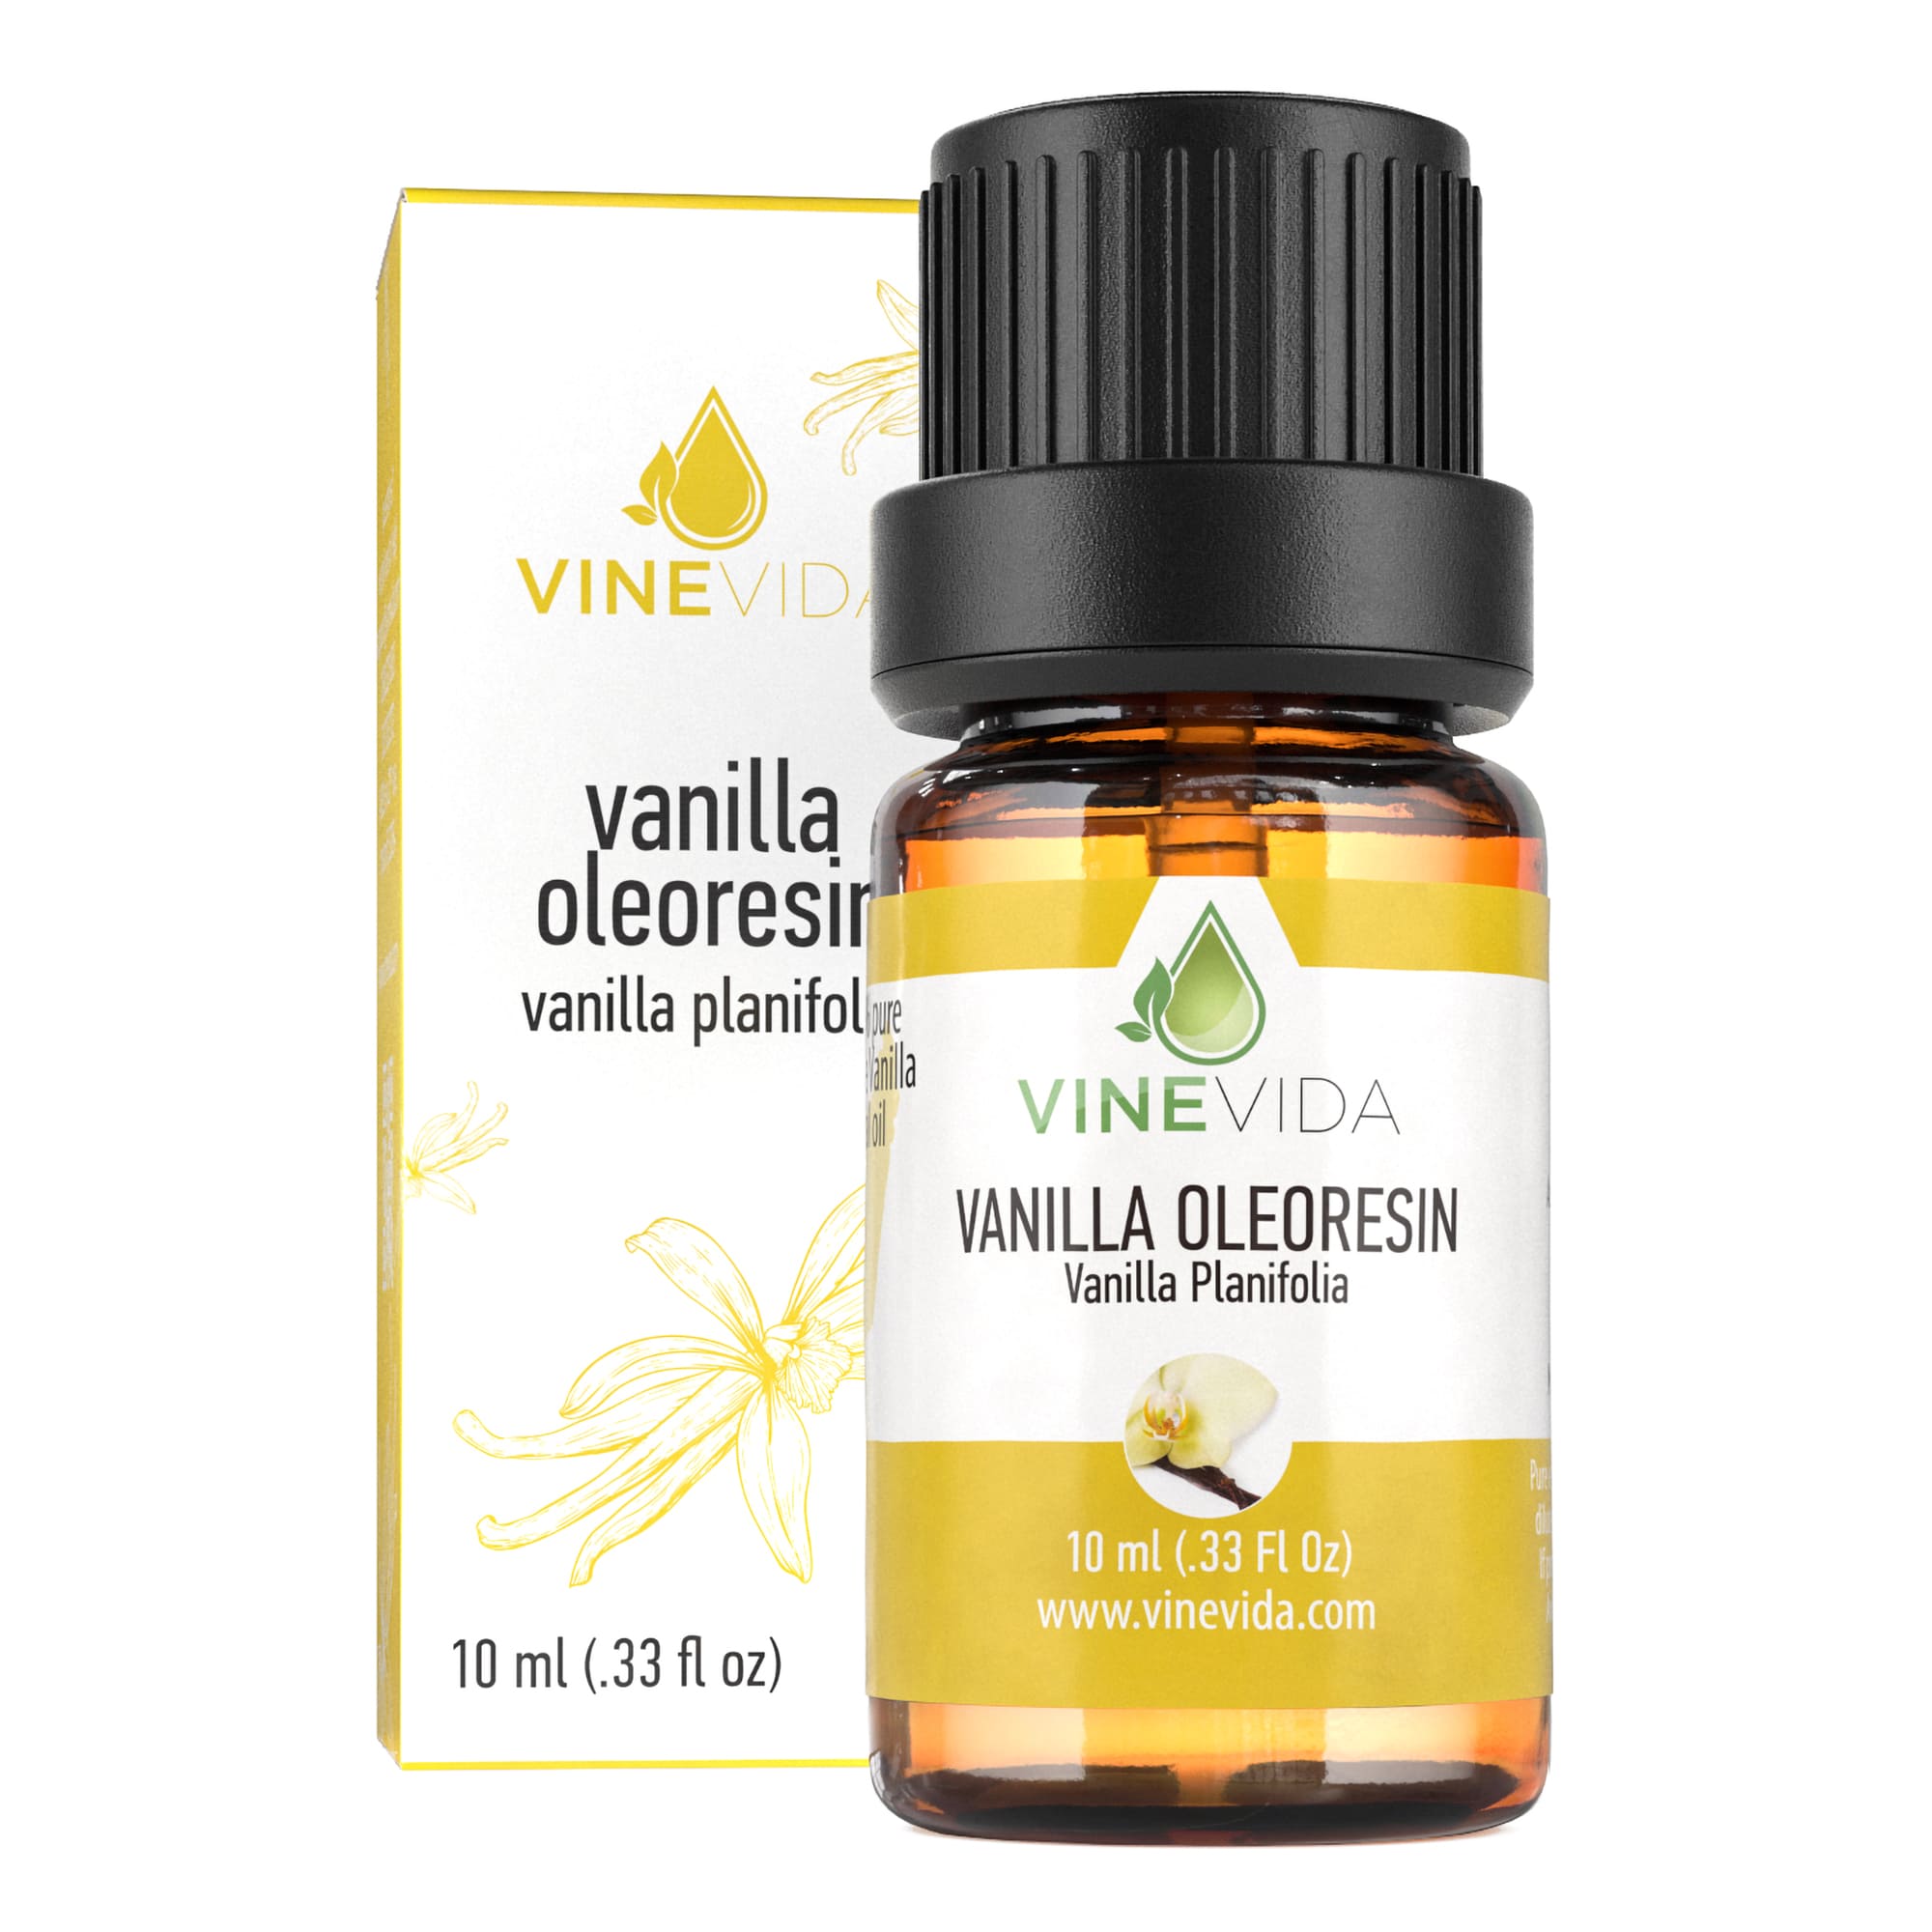 Vanilla - REVIVE Essential Oils